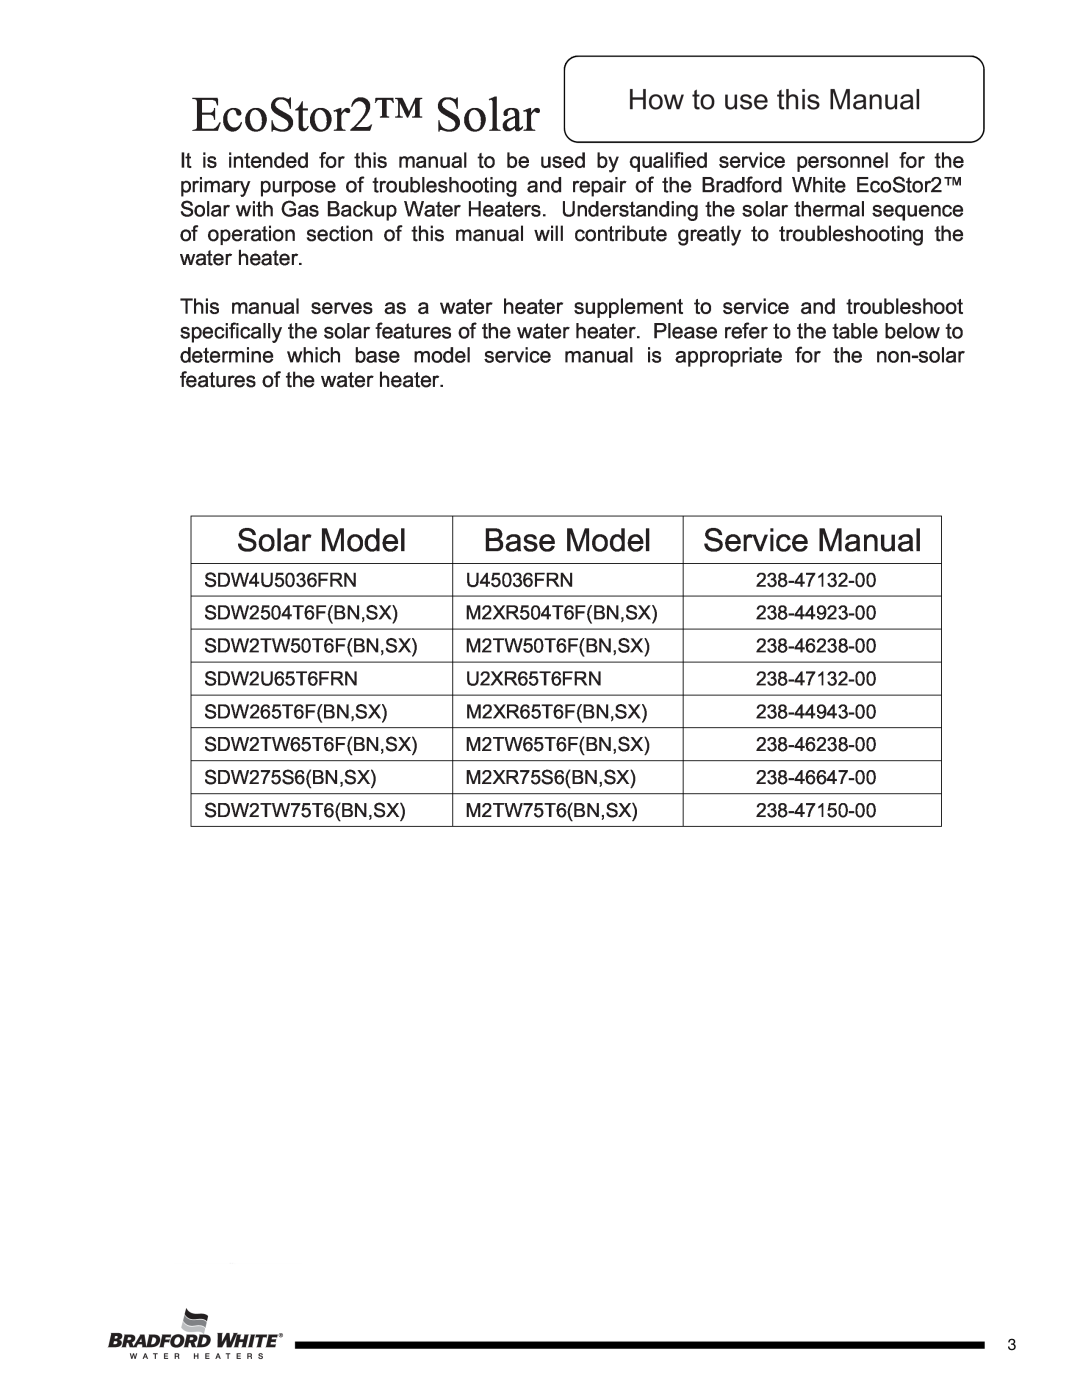 Bradford-White Corp SDW2TW75T, SDW265T EcoStor2 Solar, Solar Model, Base Model, Service Manual, How to use this Manual 